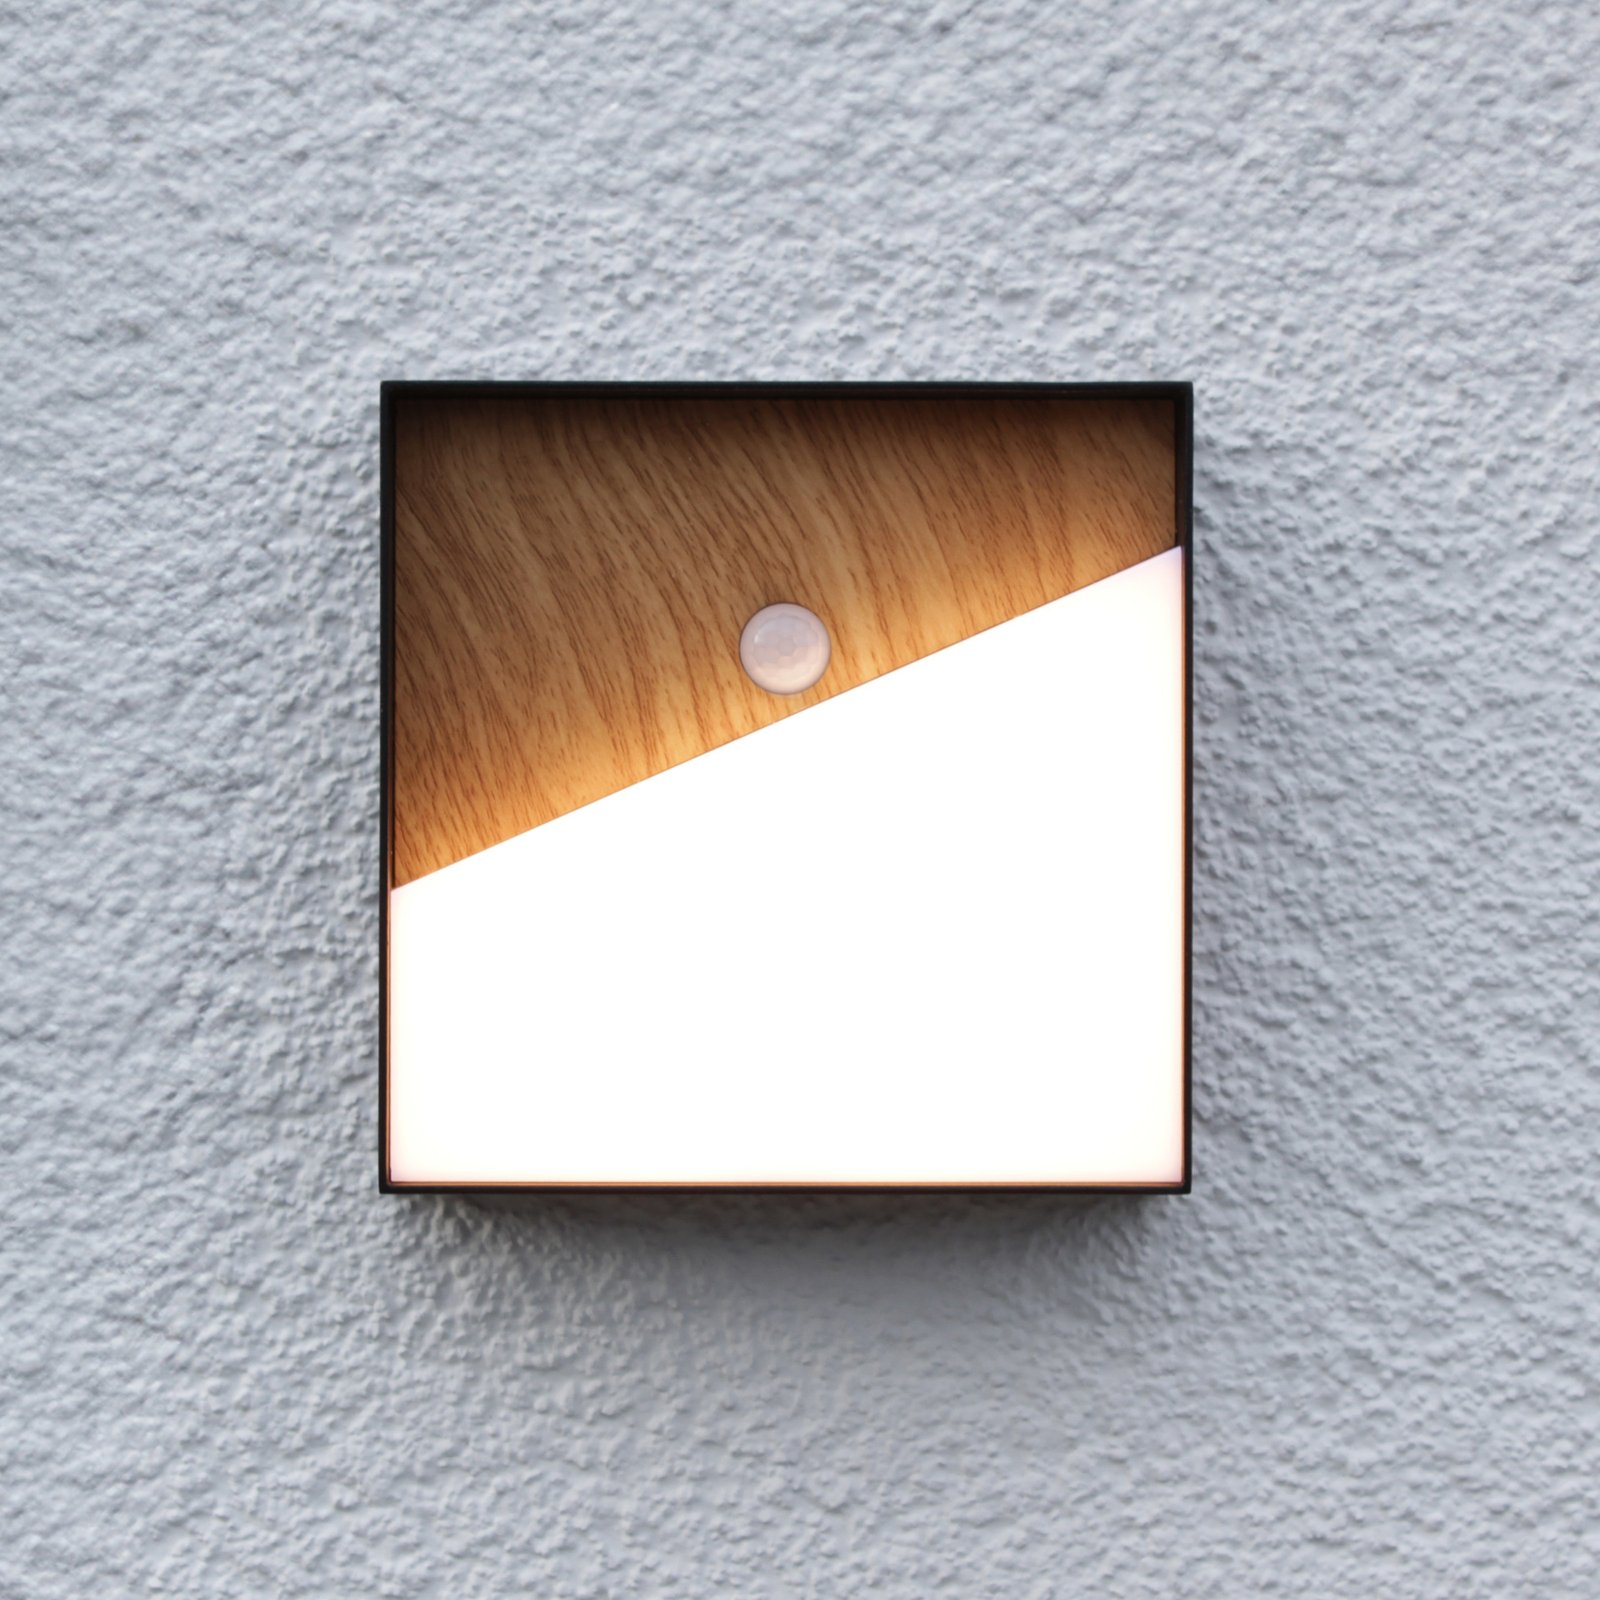 LED wall light Meg, wood-coloured, 15 x 15 cm, sensor